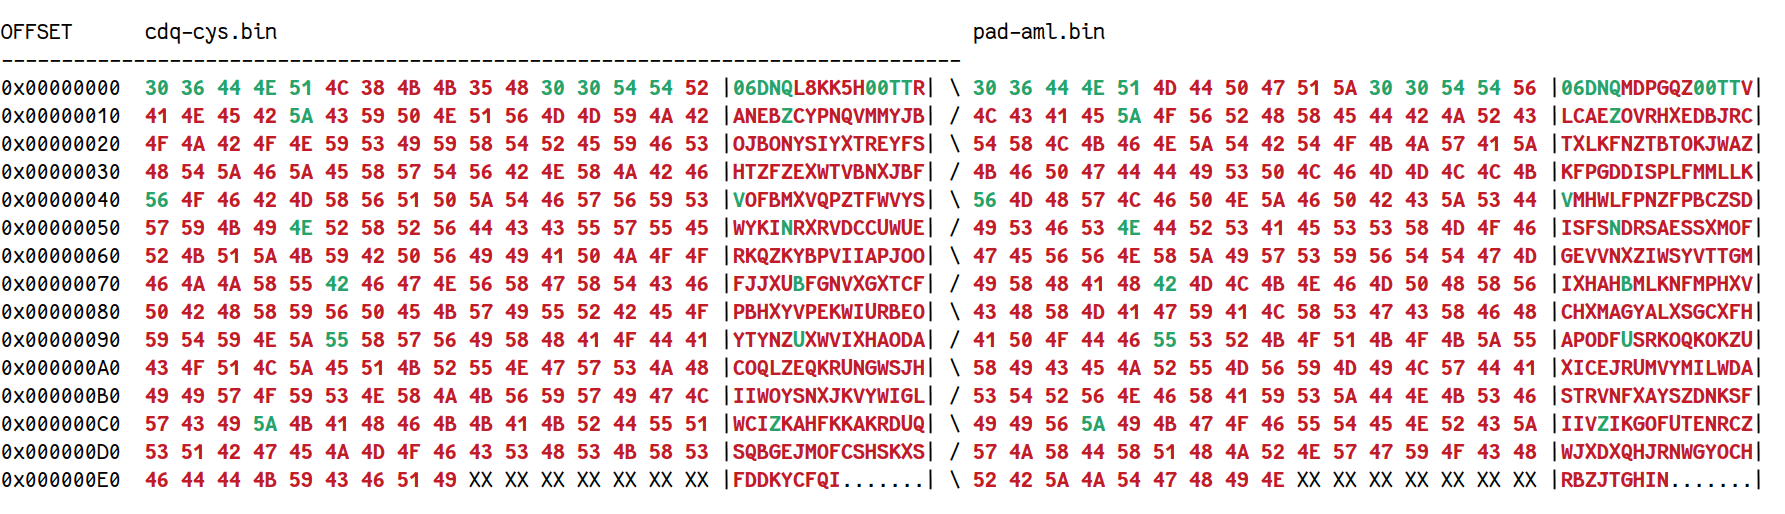 photo of 'binwalk -W cdq-cys.bin pad-aml.bin', showing no shared data apart from a few random bytes and some headers